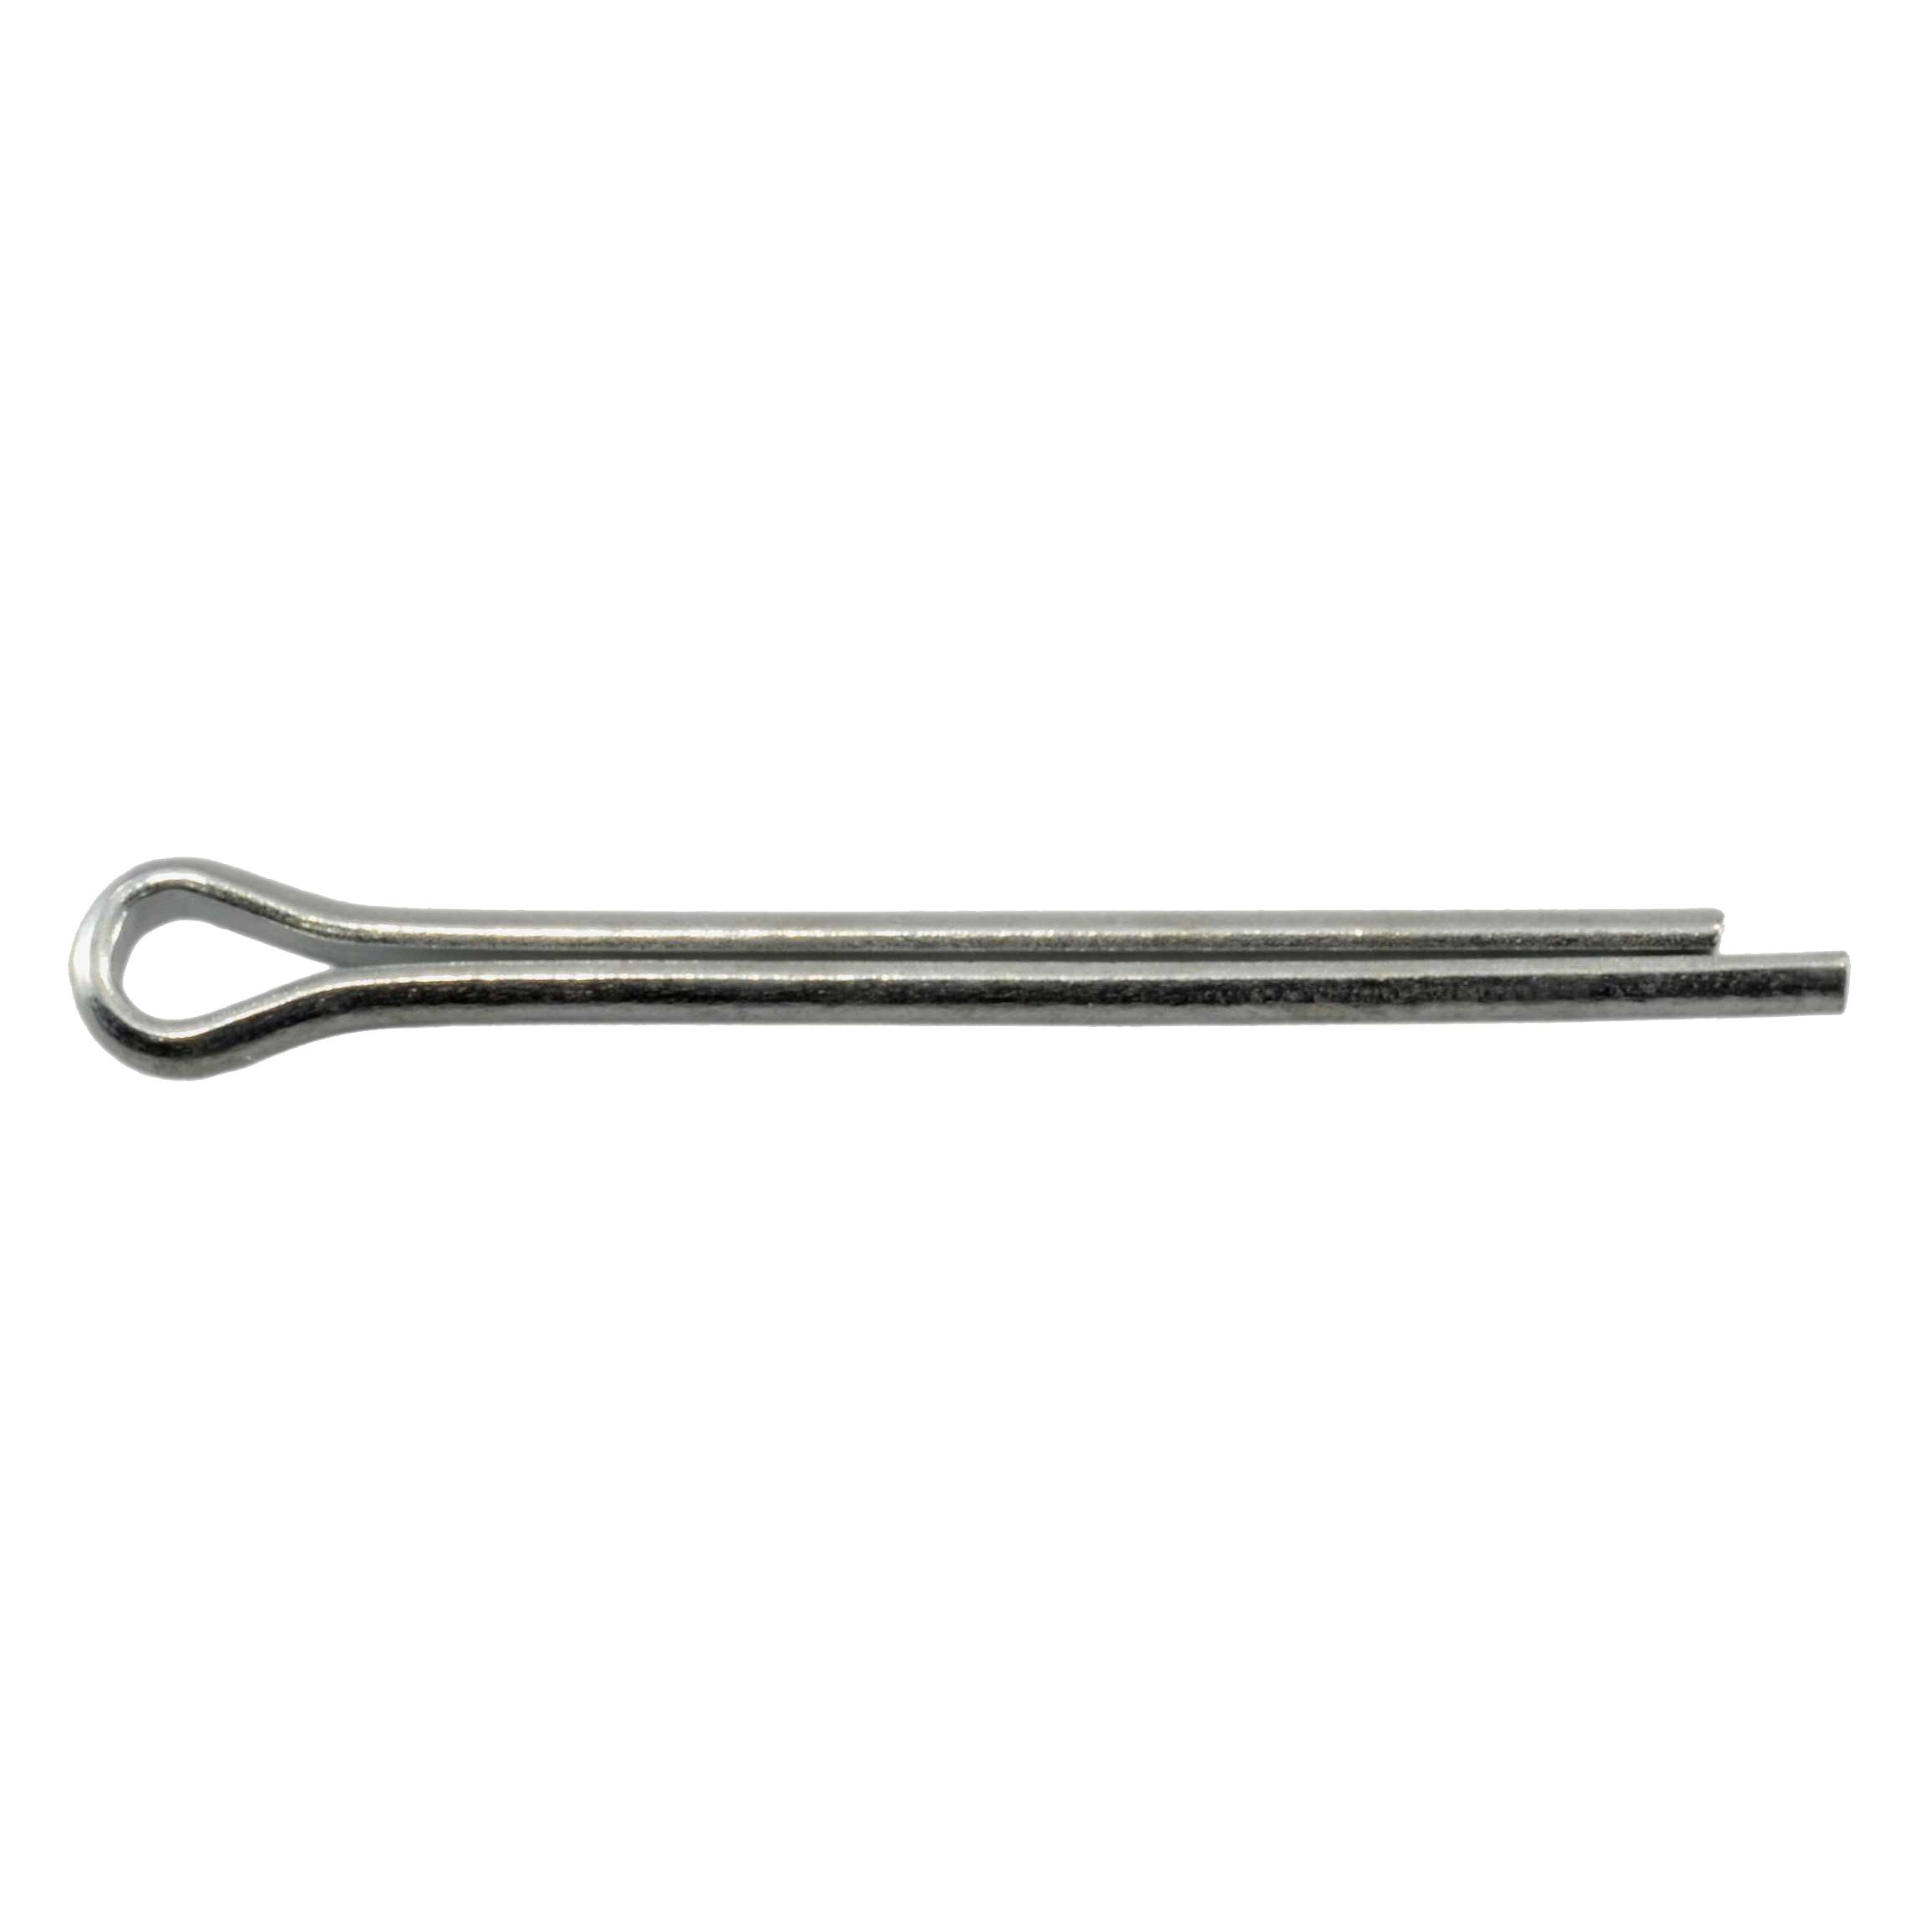 1/8 x 1-1/2 Inch 100 Piece Spring Steel Cotter Pins